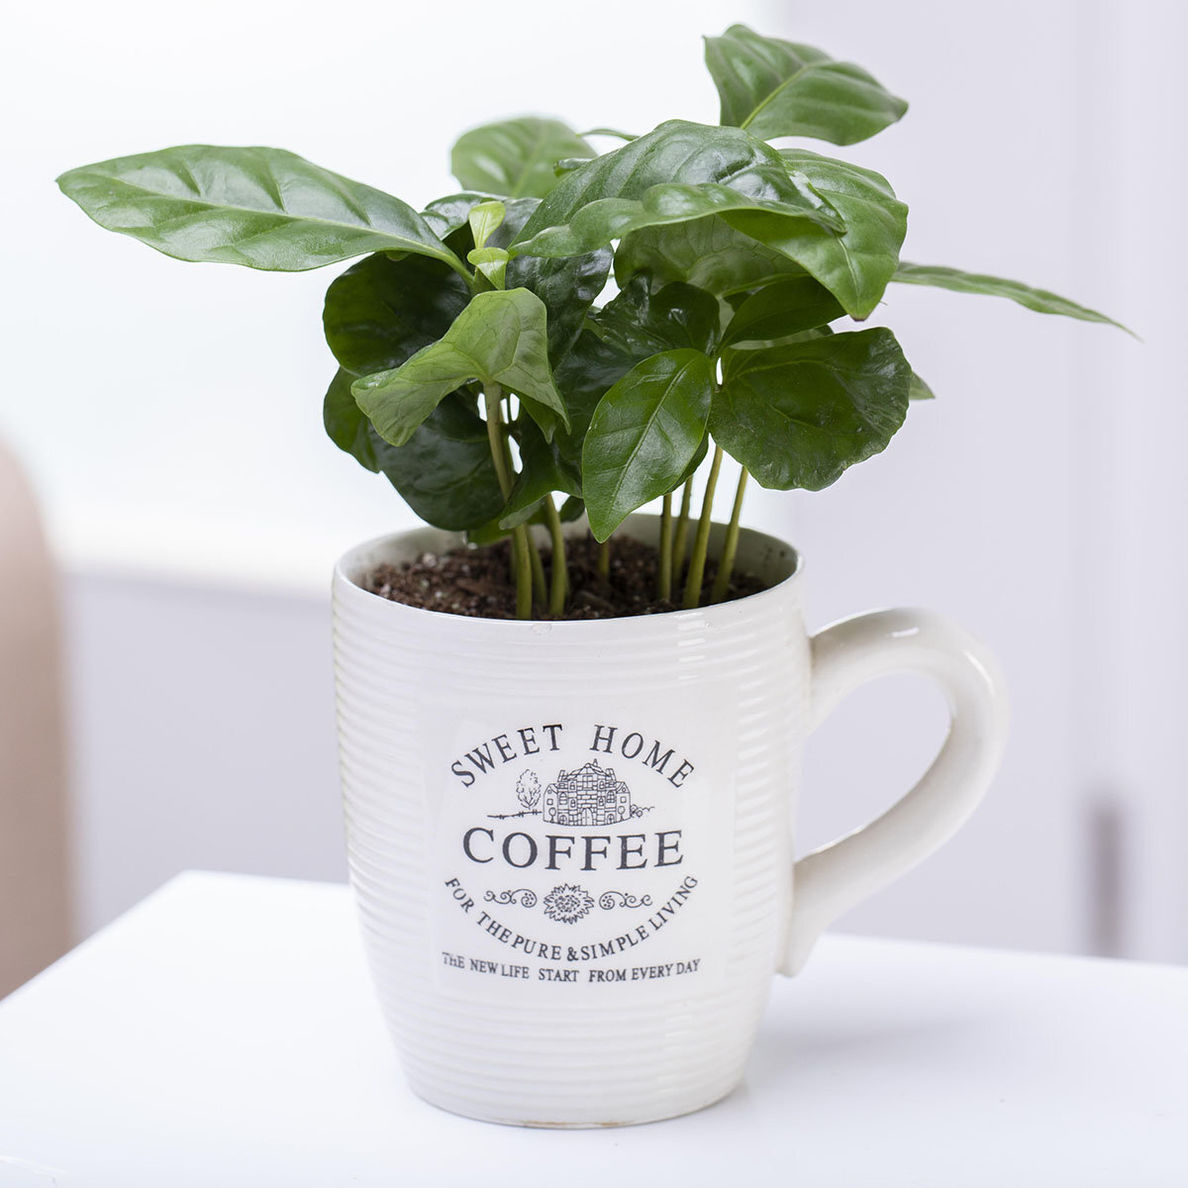 Kaffeepflanze Coffea Arabica inkl. Kaffeetasse | Weltbild.de